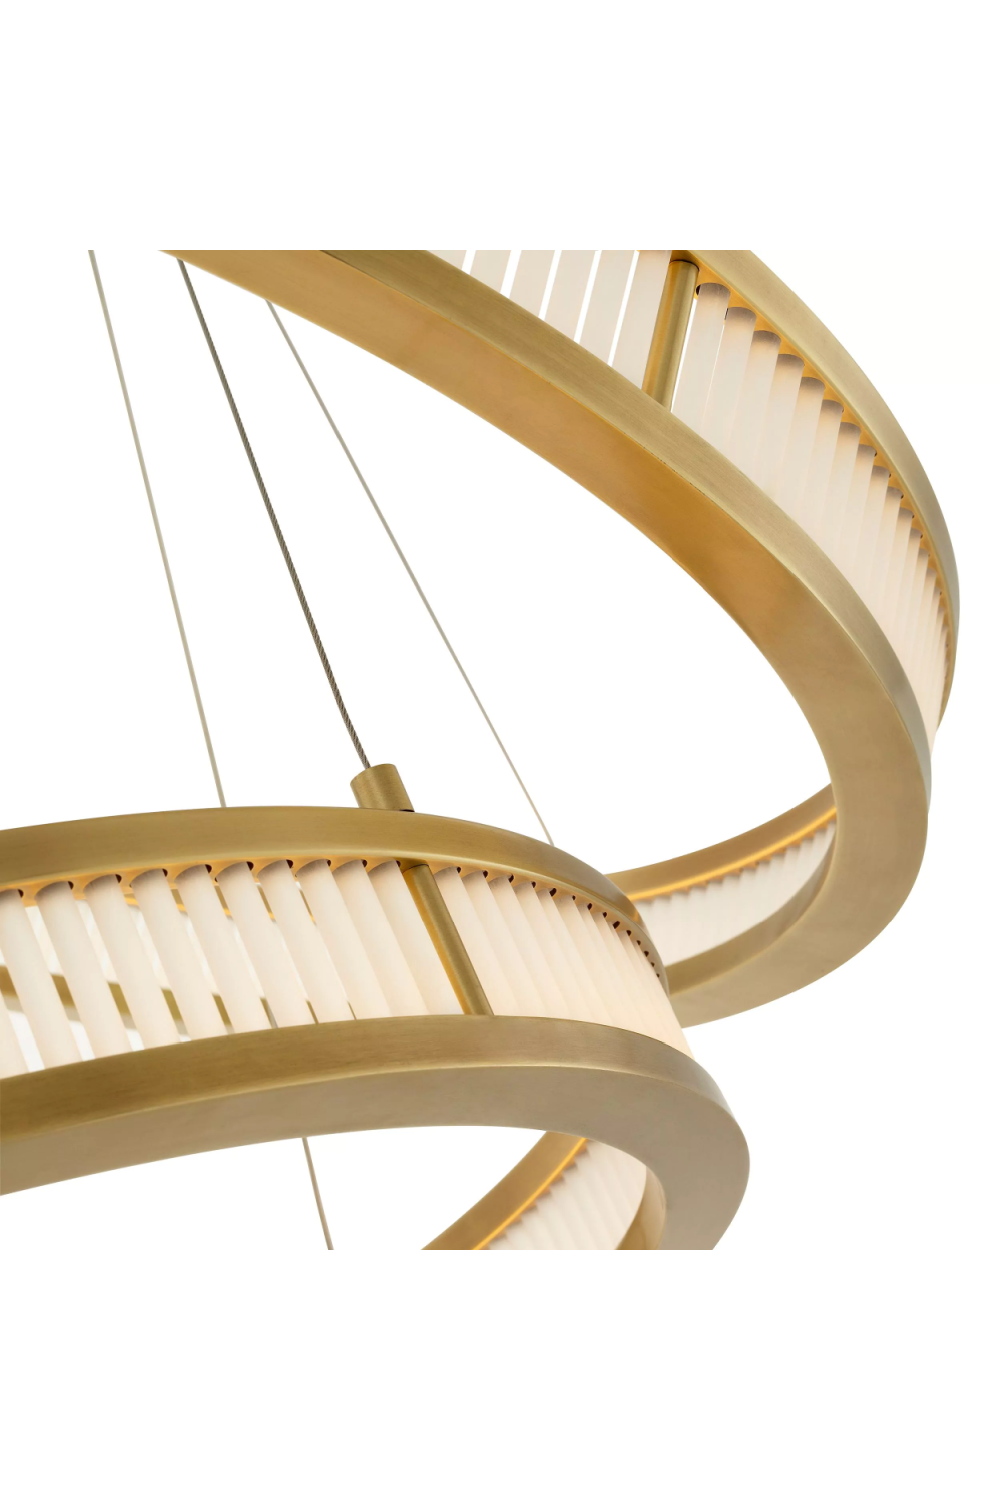 Brass Double Ring LED Chandelier | Eichholtz Damien | OROA